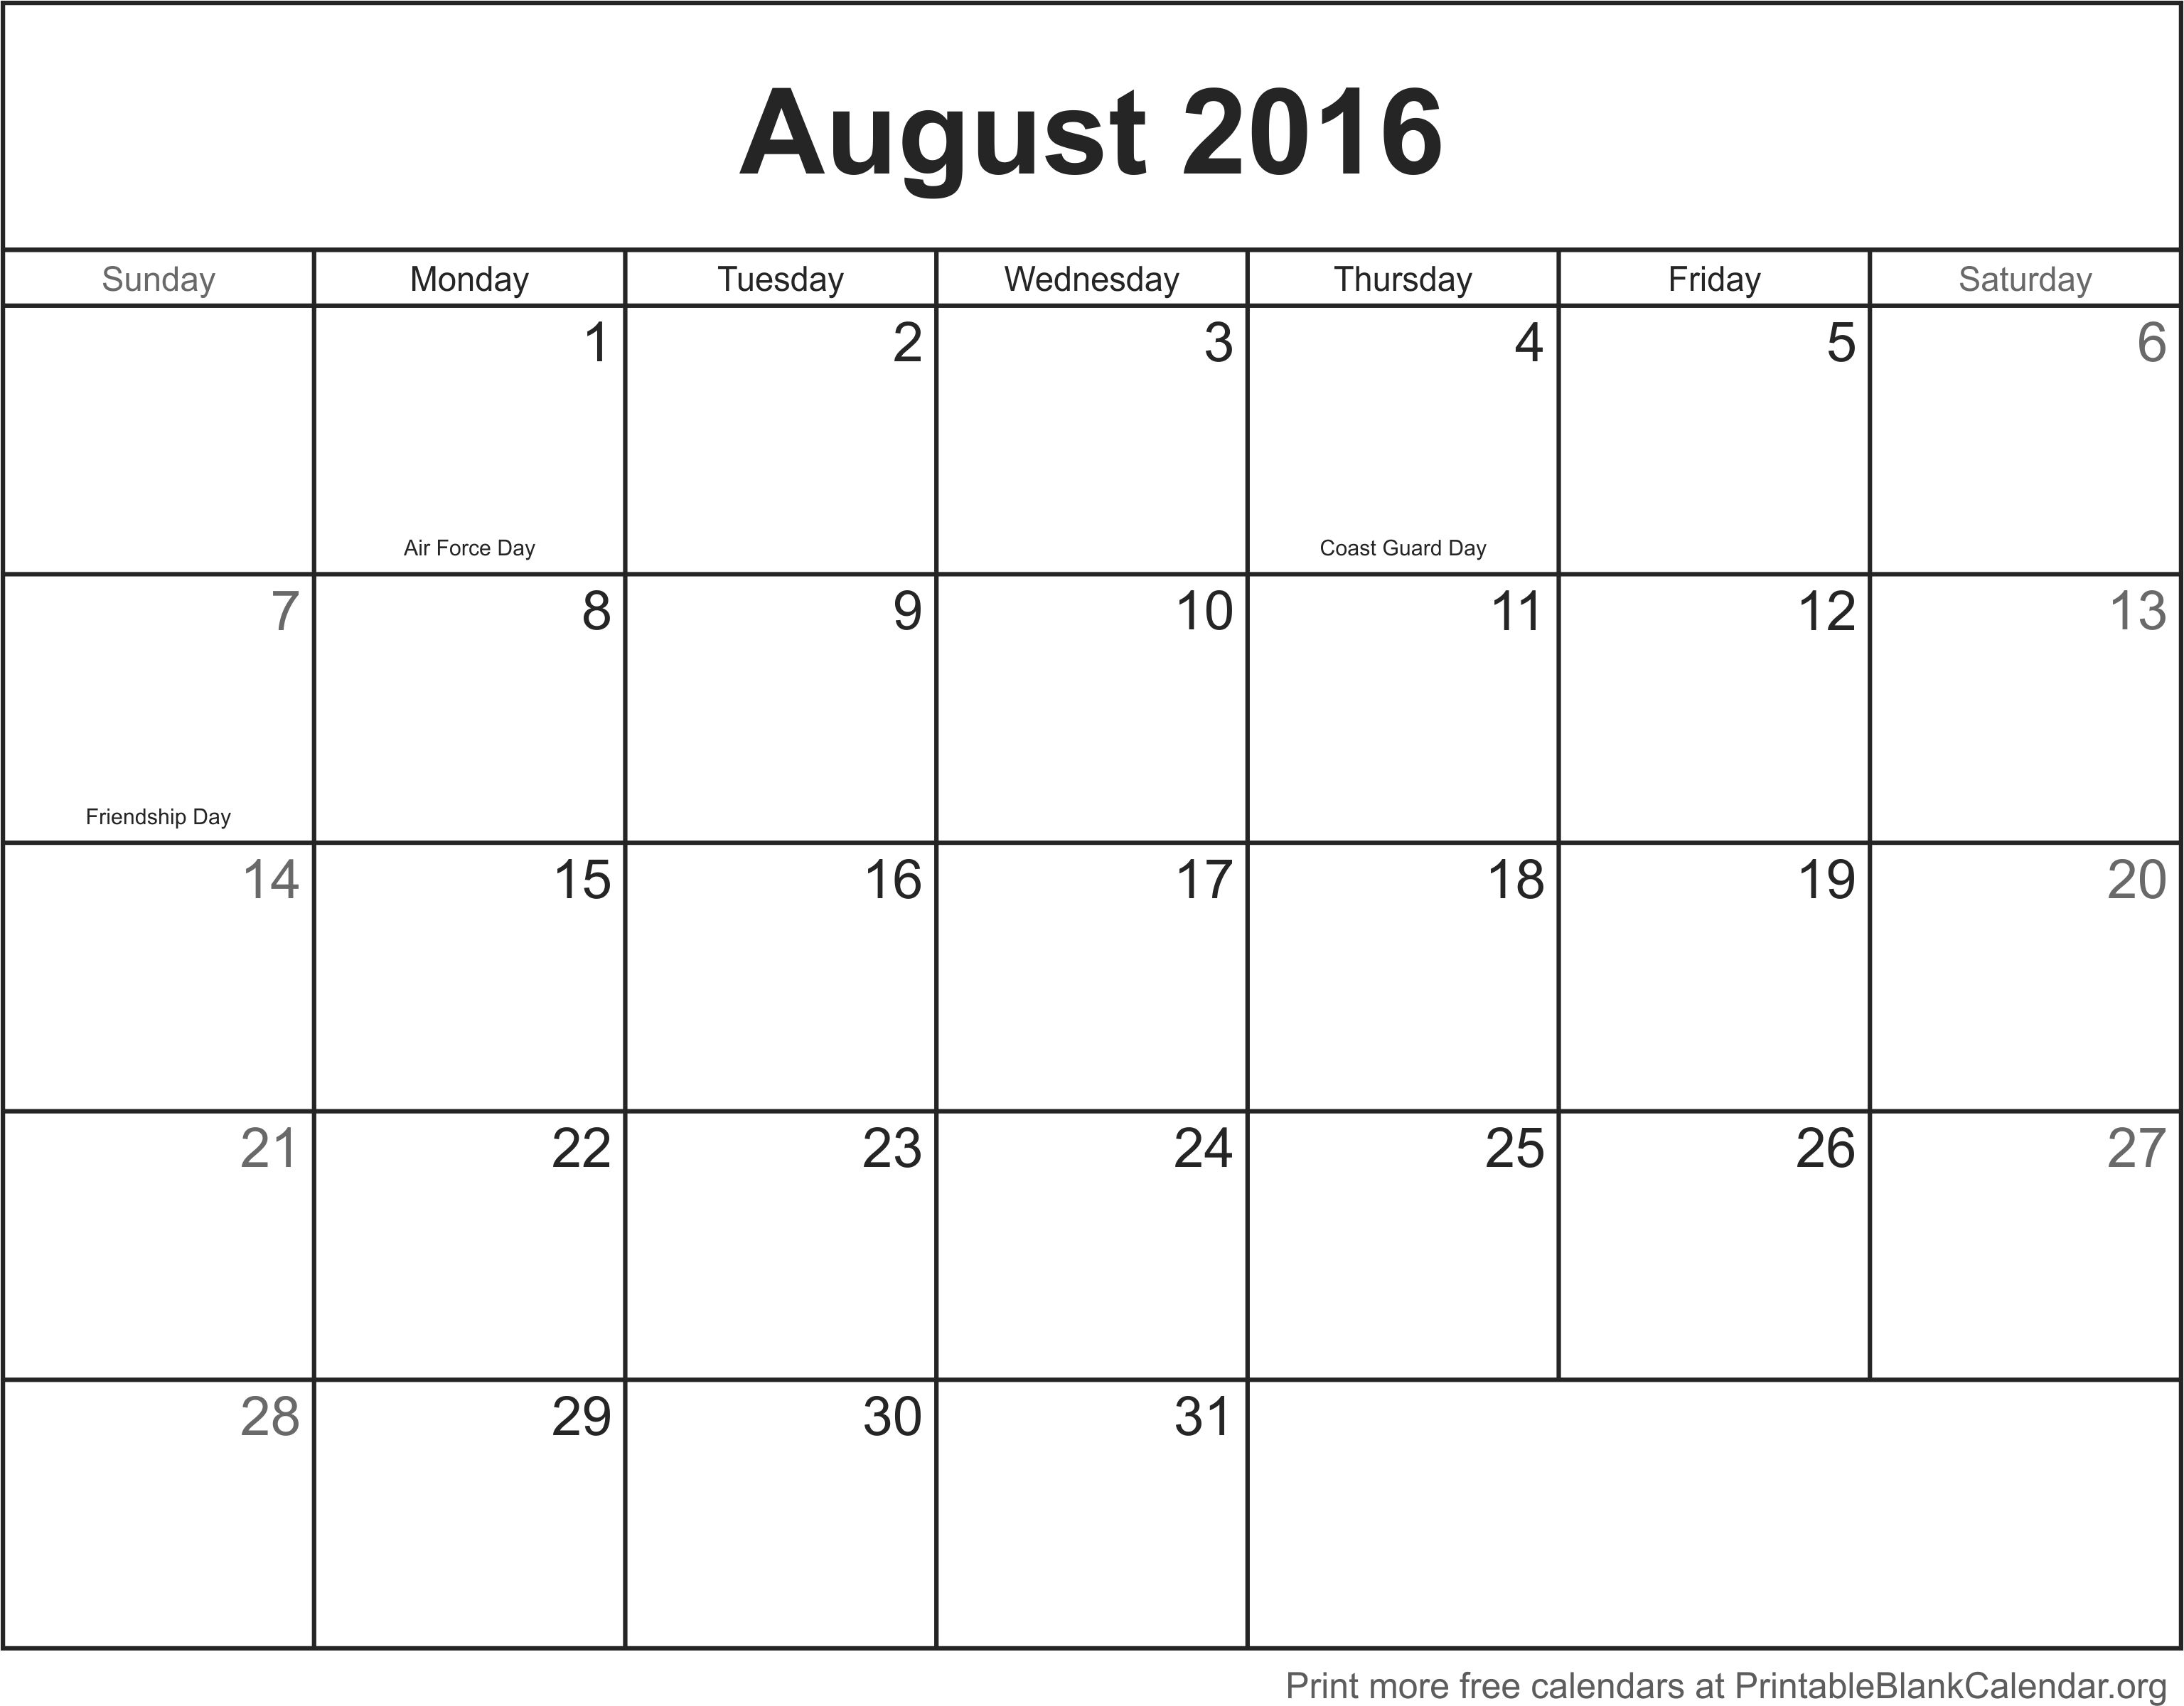 free calendar August 2016 Printable Blank Calendar org